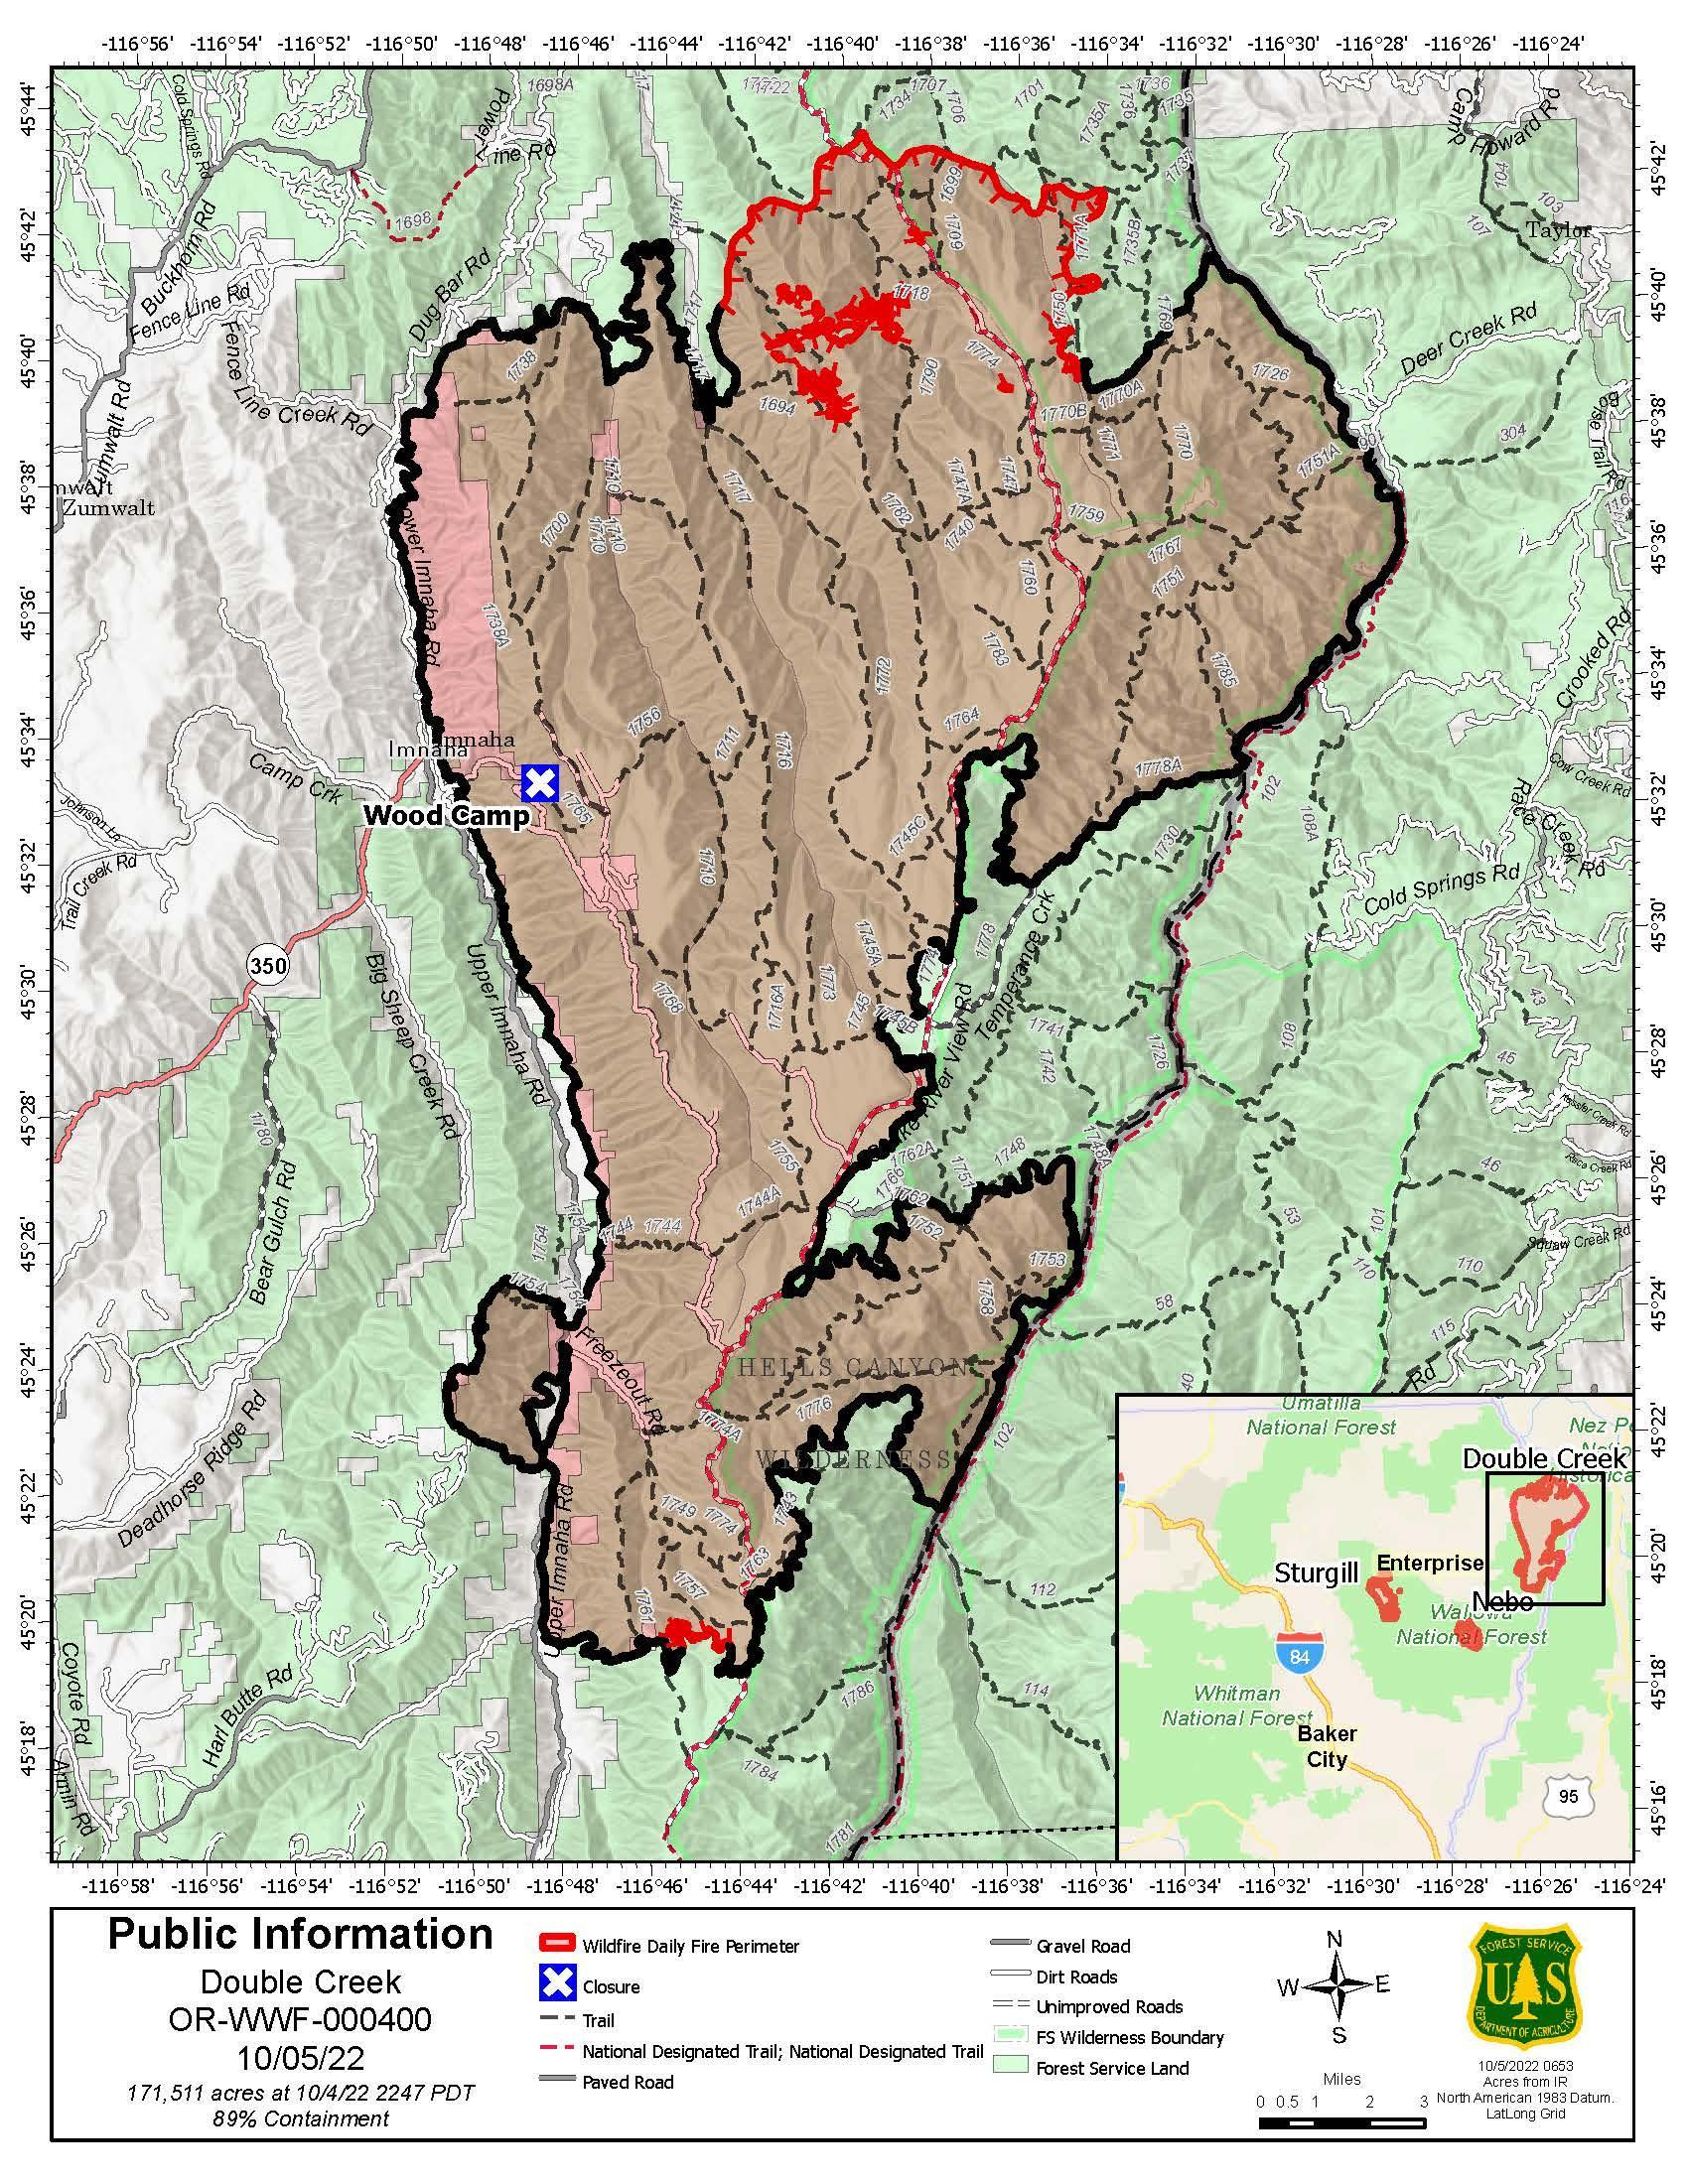 Sturgill Fire Map - 10/05/2022